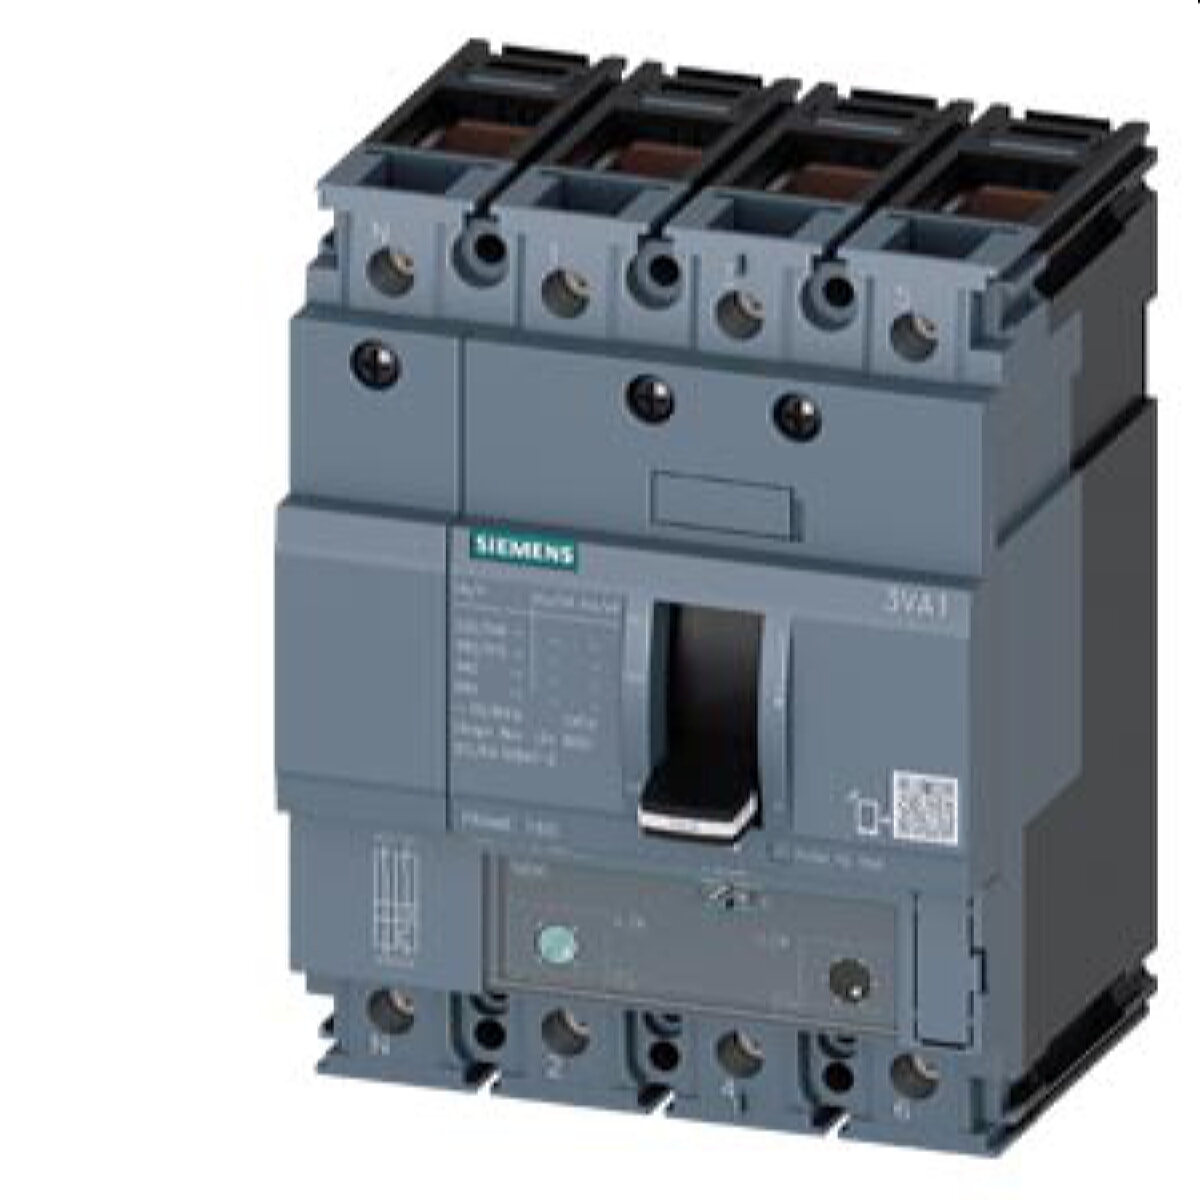 Siemens Leistungsschalter 3VA1 25kA ATAM 70-100A 3VA1110-3EF46-0AA0